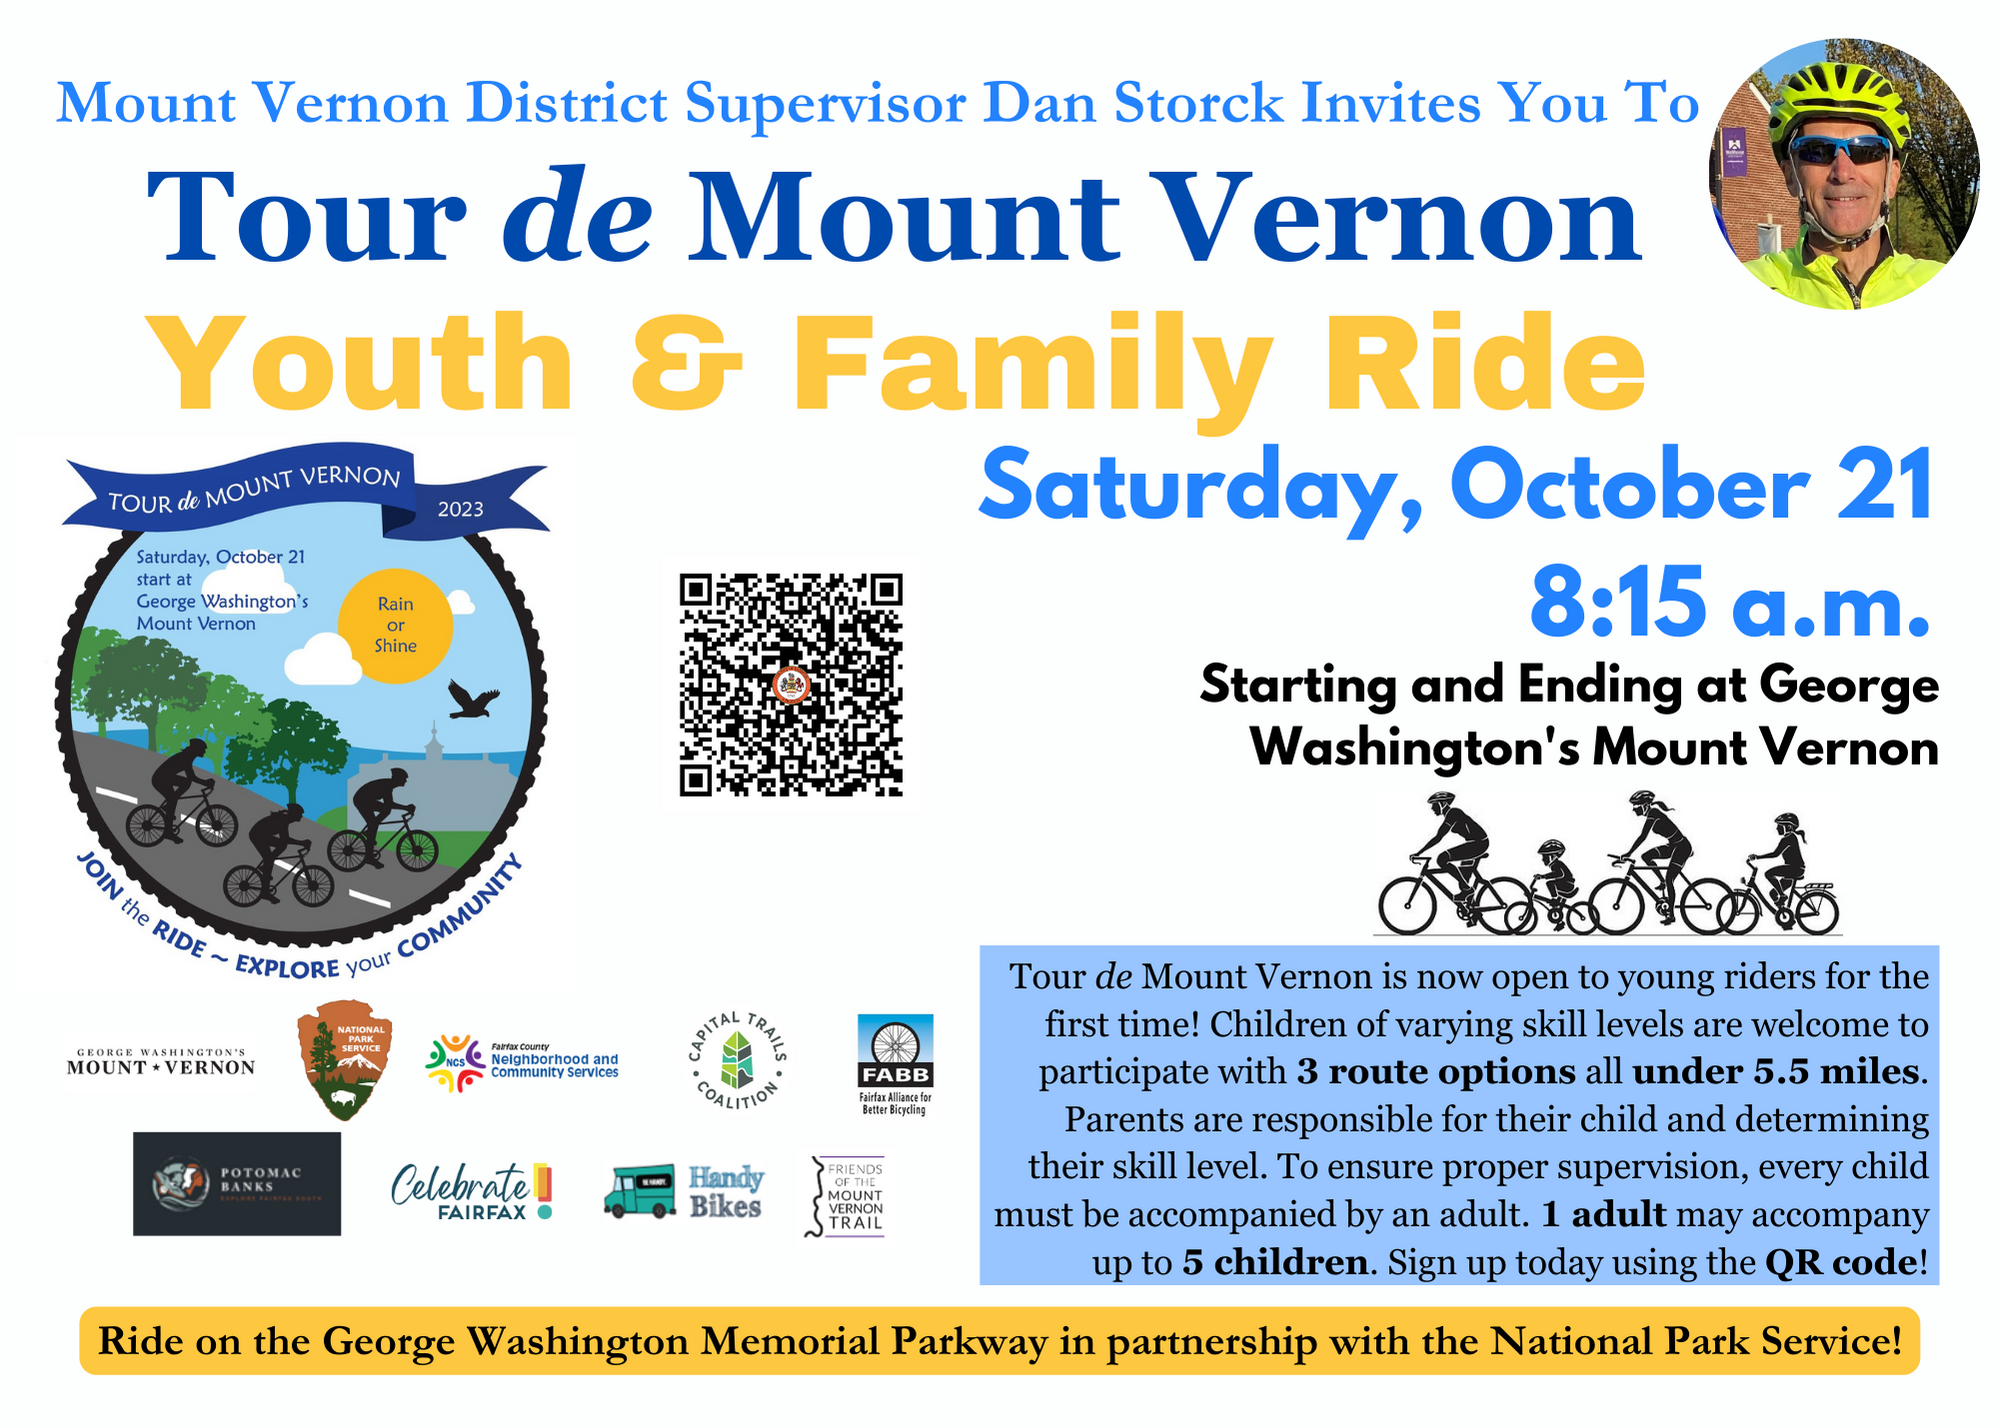 Tour de Mount Vernon Youth and Family Ride